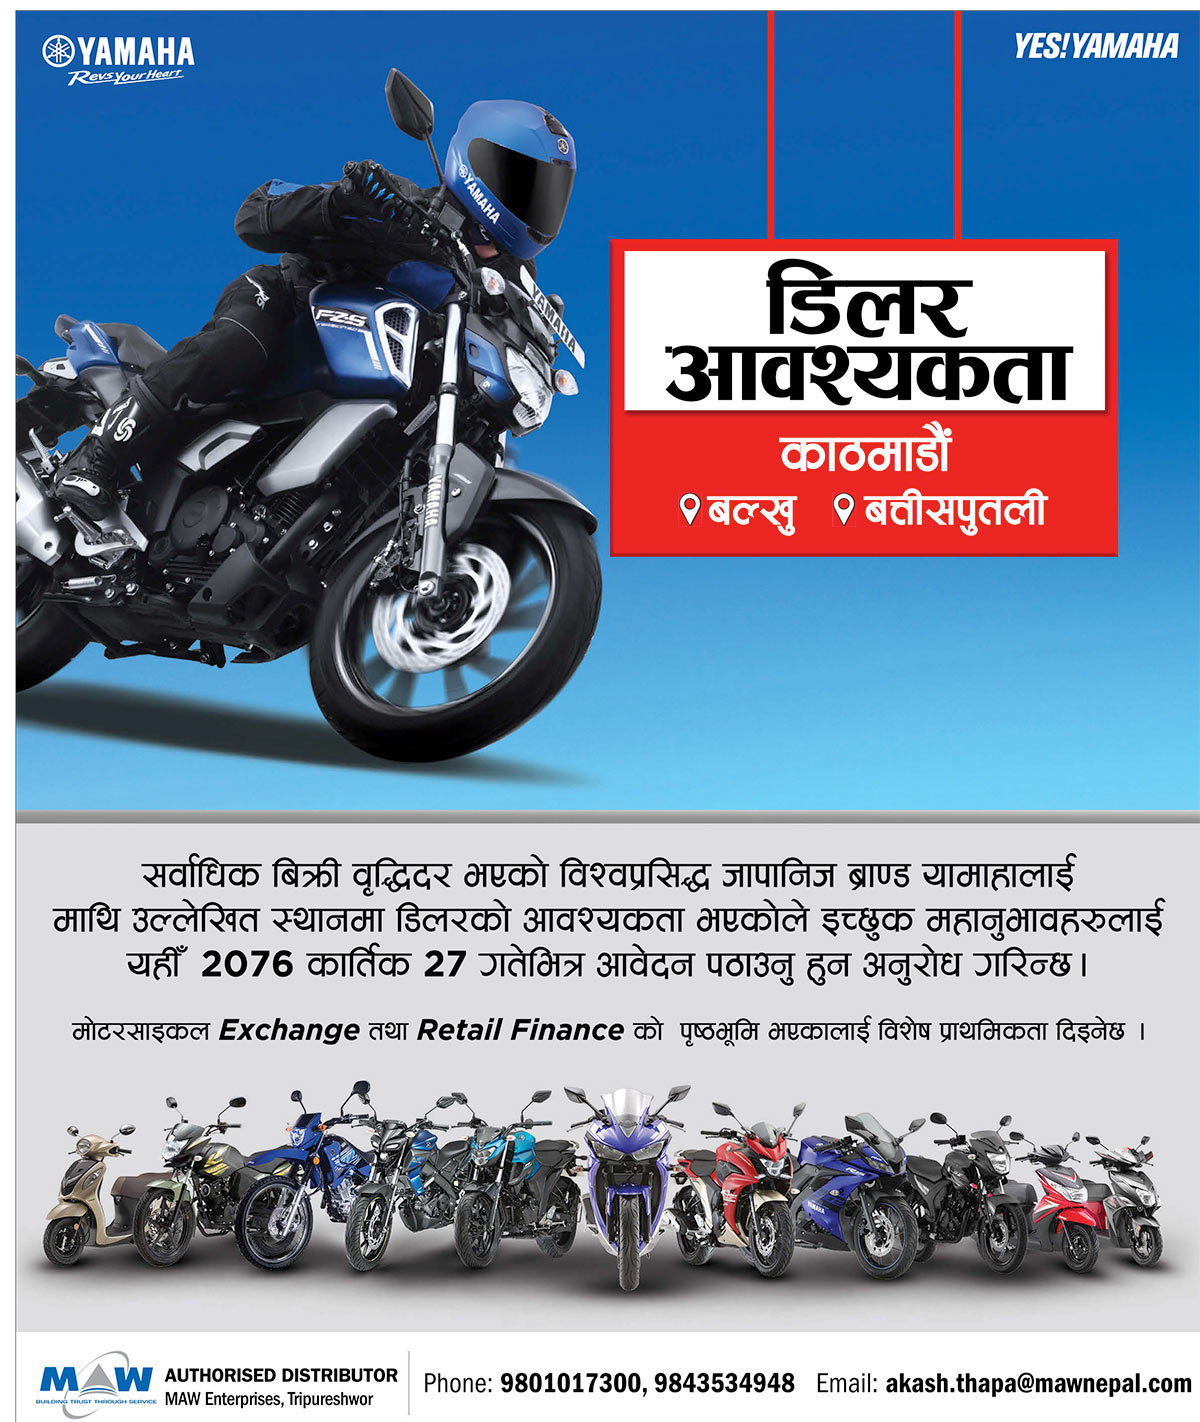 Yamaha Invites Application For Dealership Inside Kathmandu